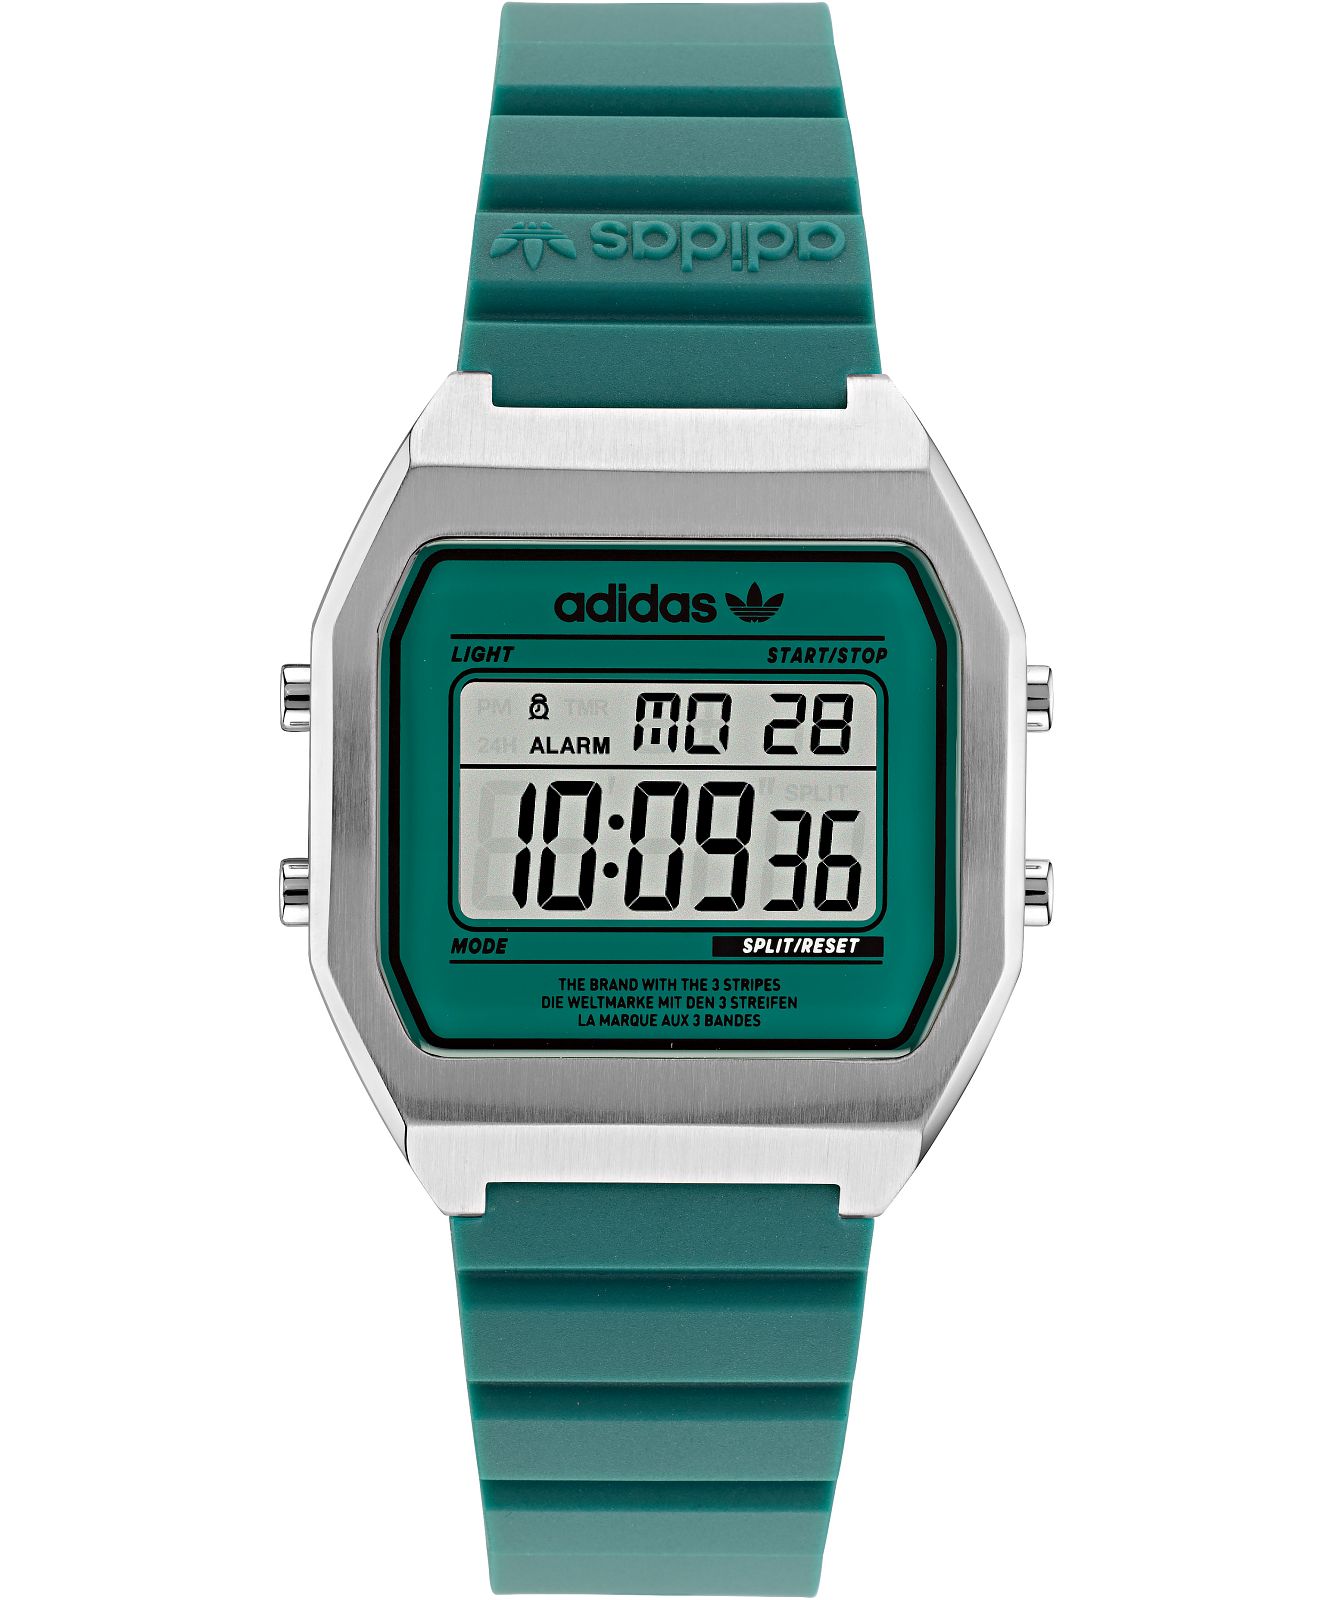 Adidas Originals AOST22076 Digital Watch - • Two Street